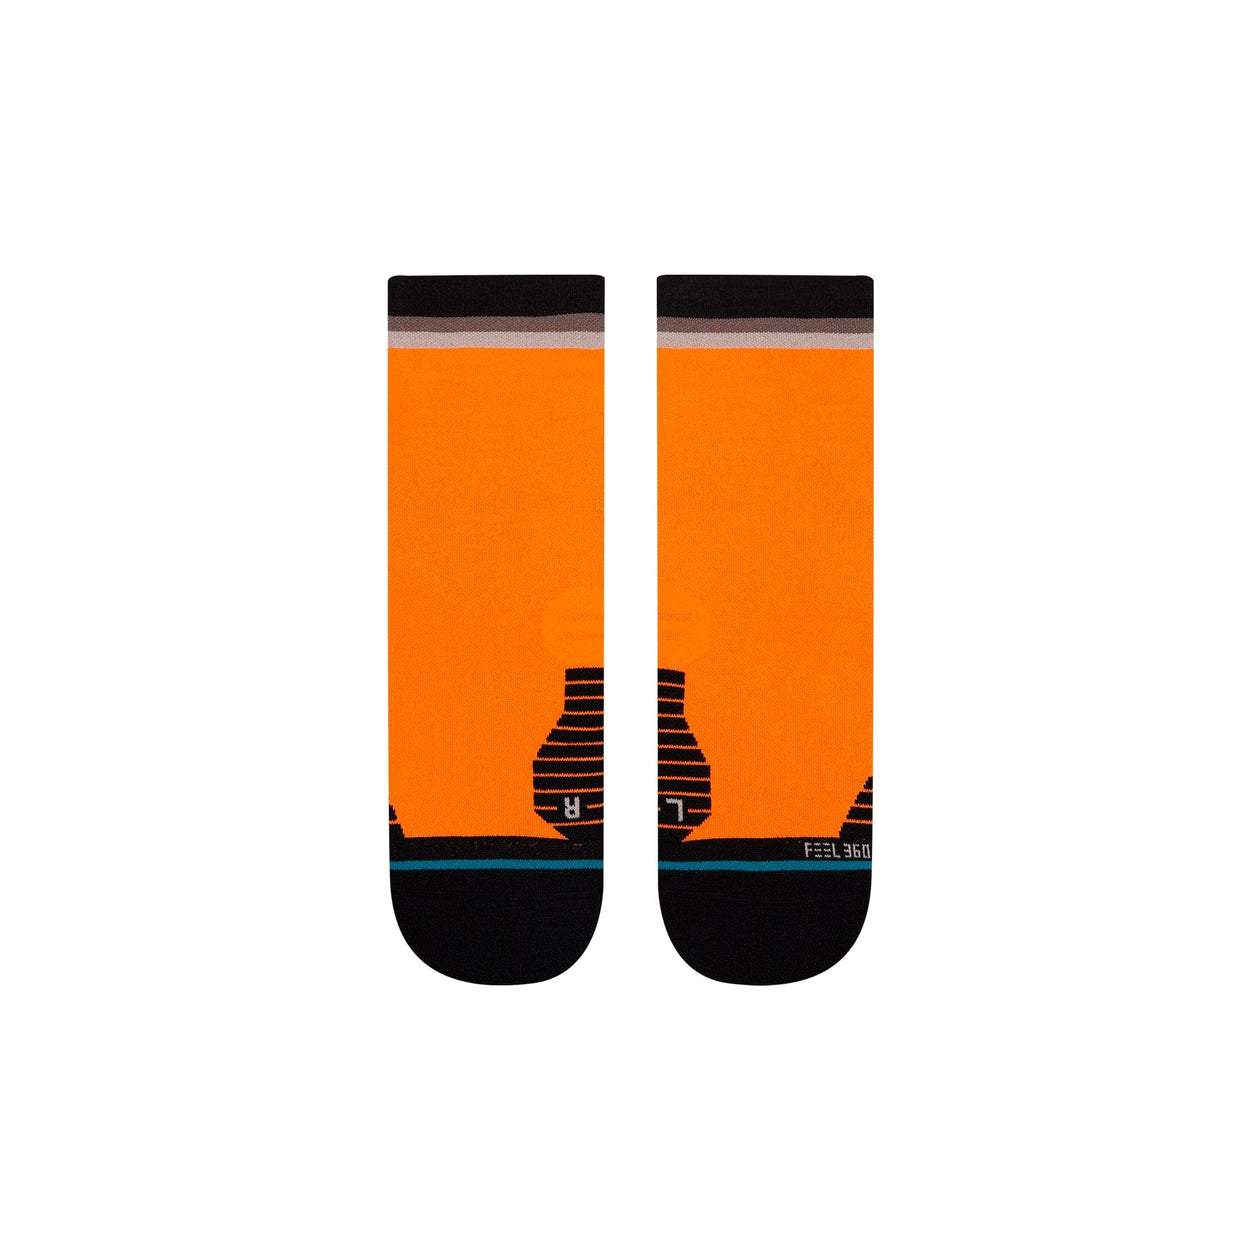 orange ankle socks